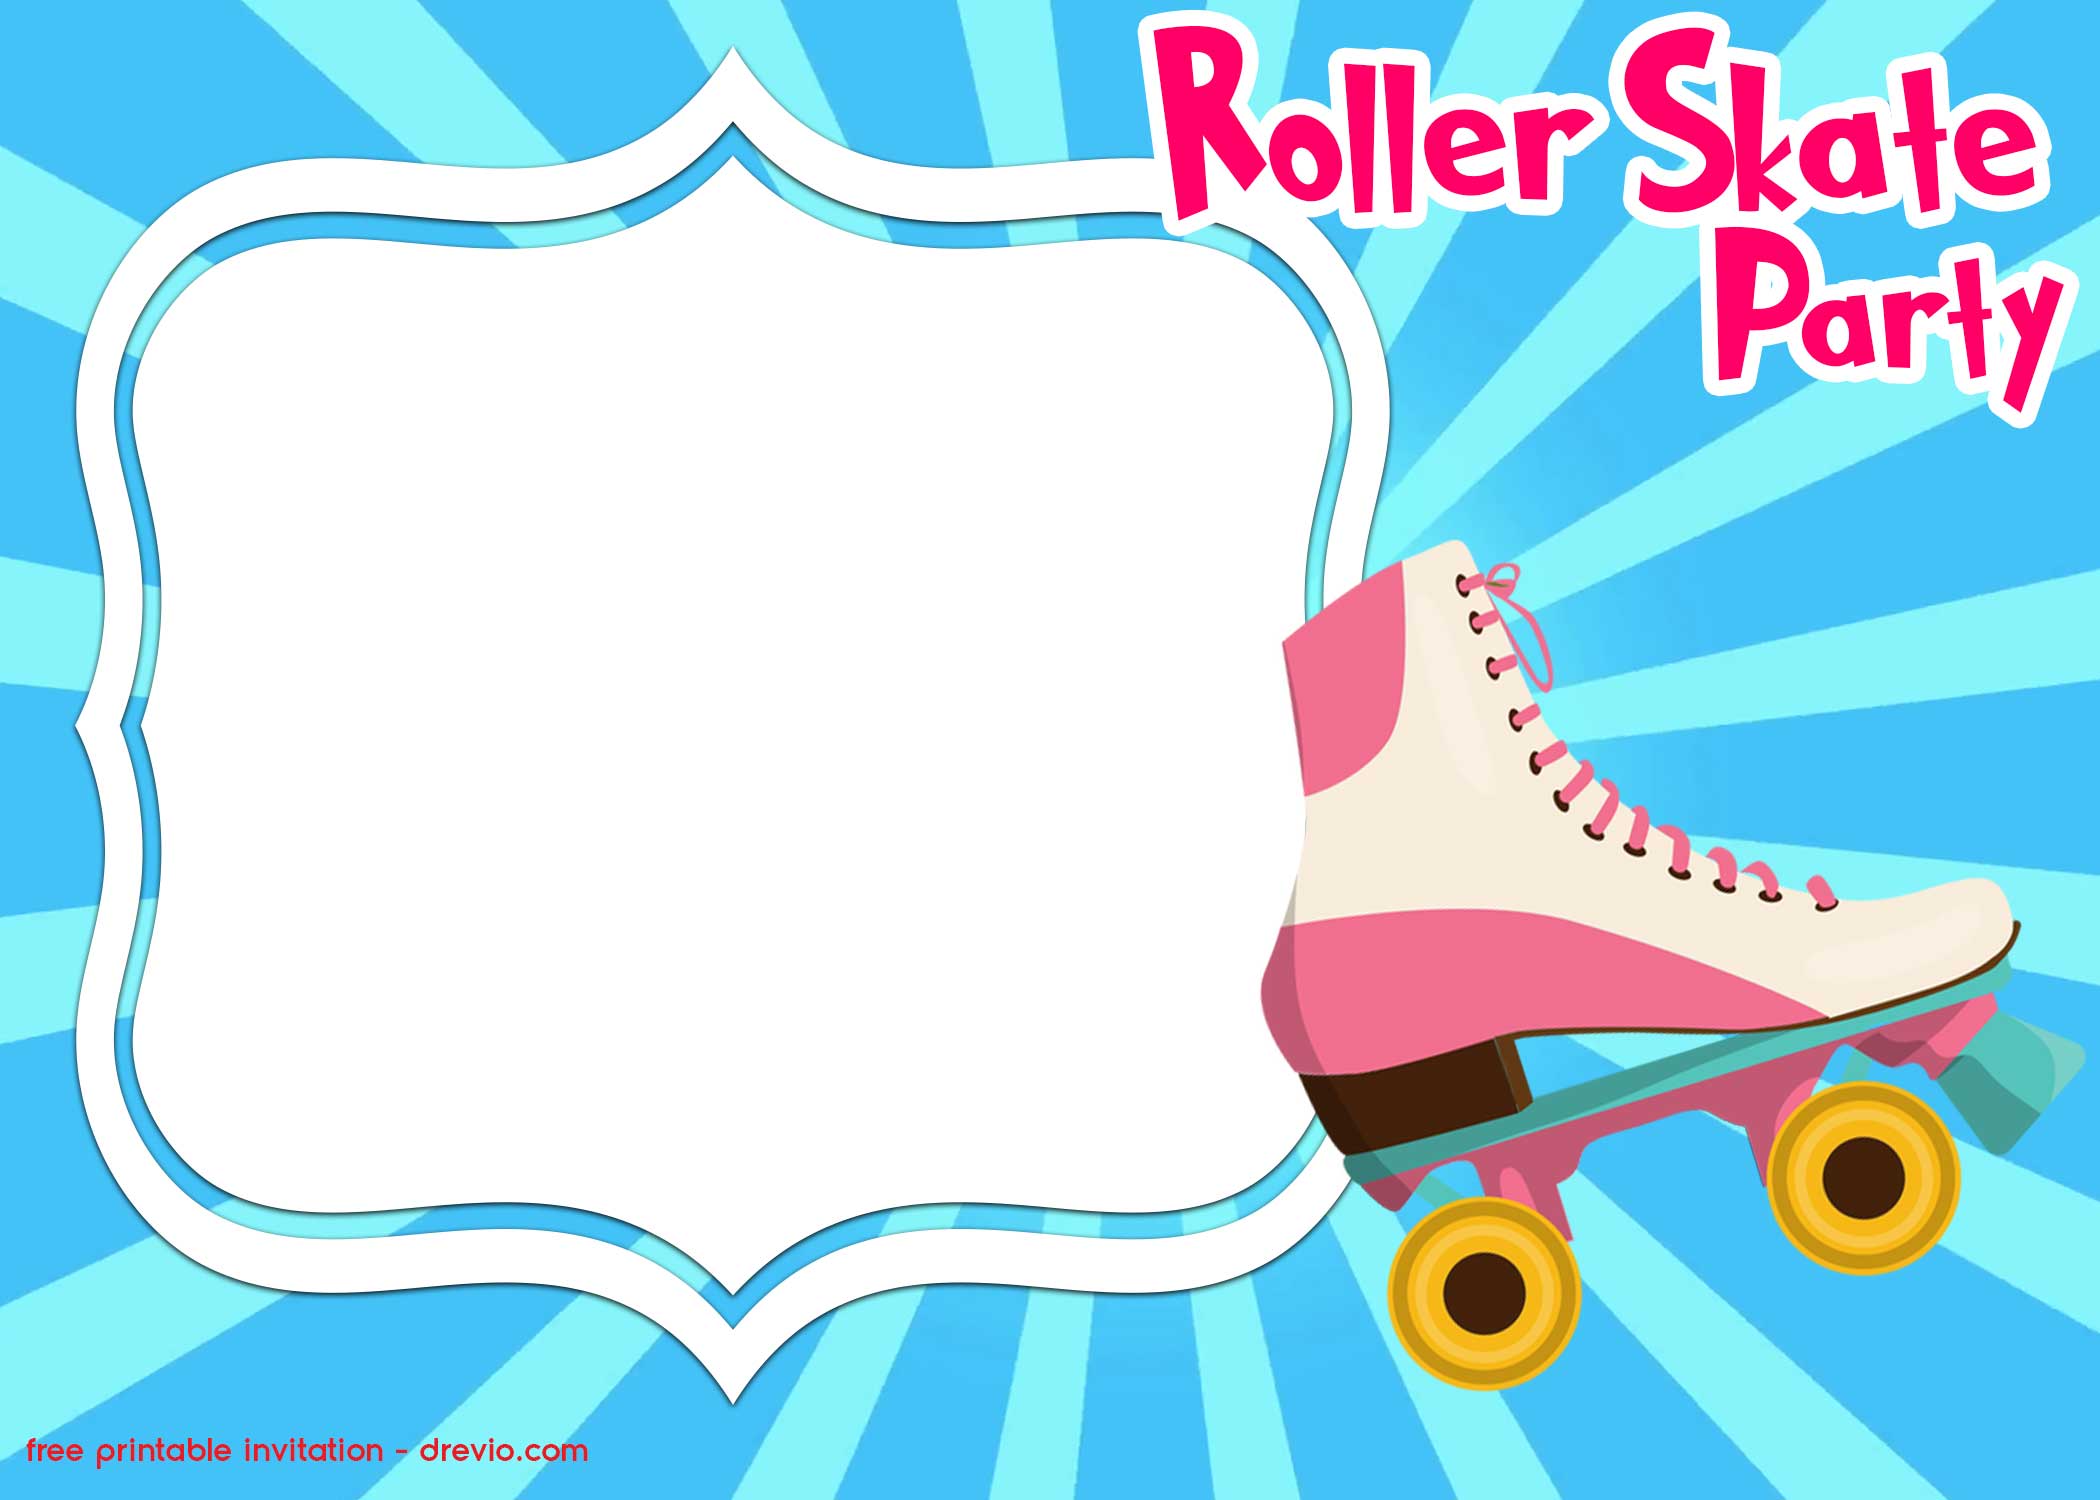 free roller skating invitation templates | free printable birthday